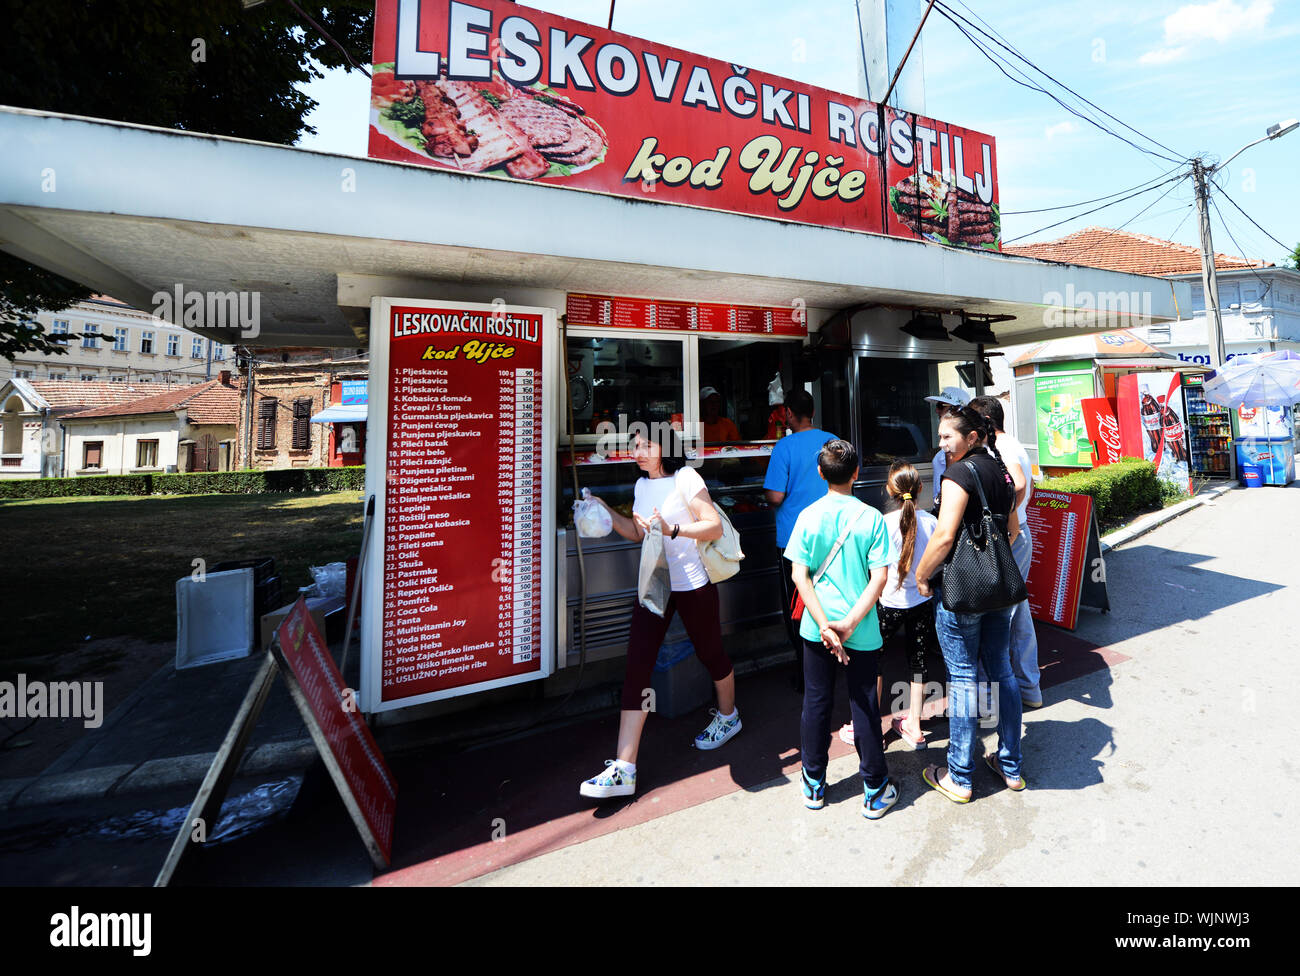 Die berühmte Leskovački Roštilj gegrilltes Fleisch Takeaway Restaurant in Nis, Serbien. Stockfoto